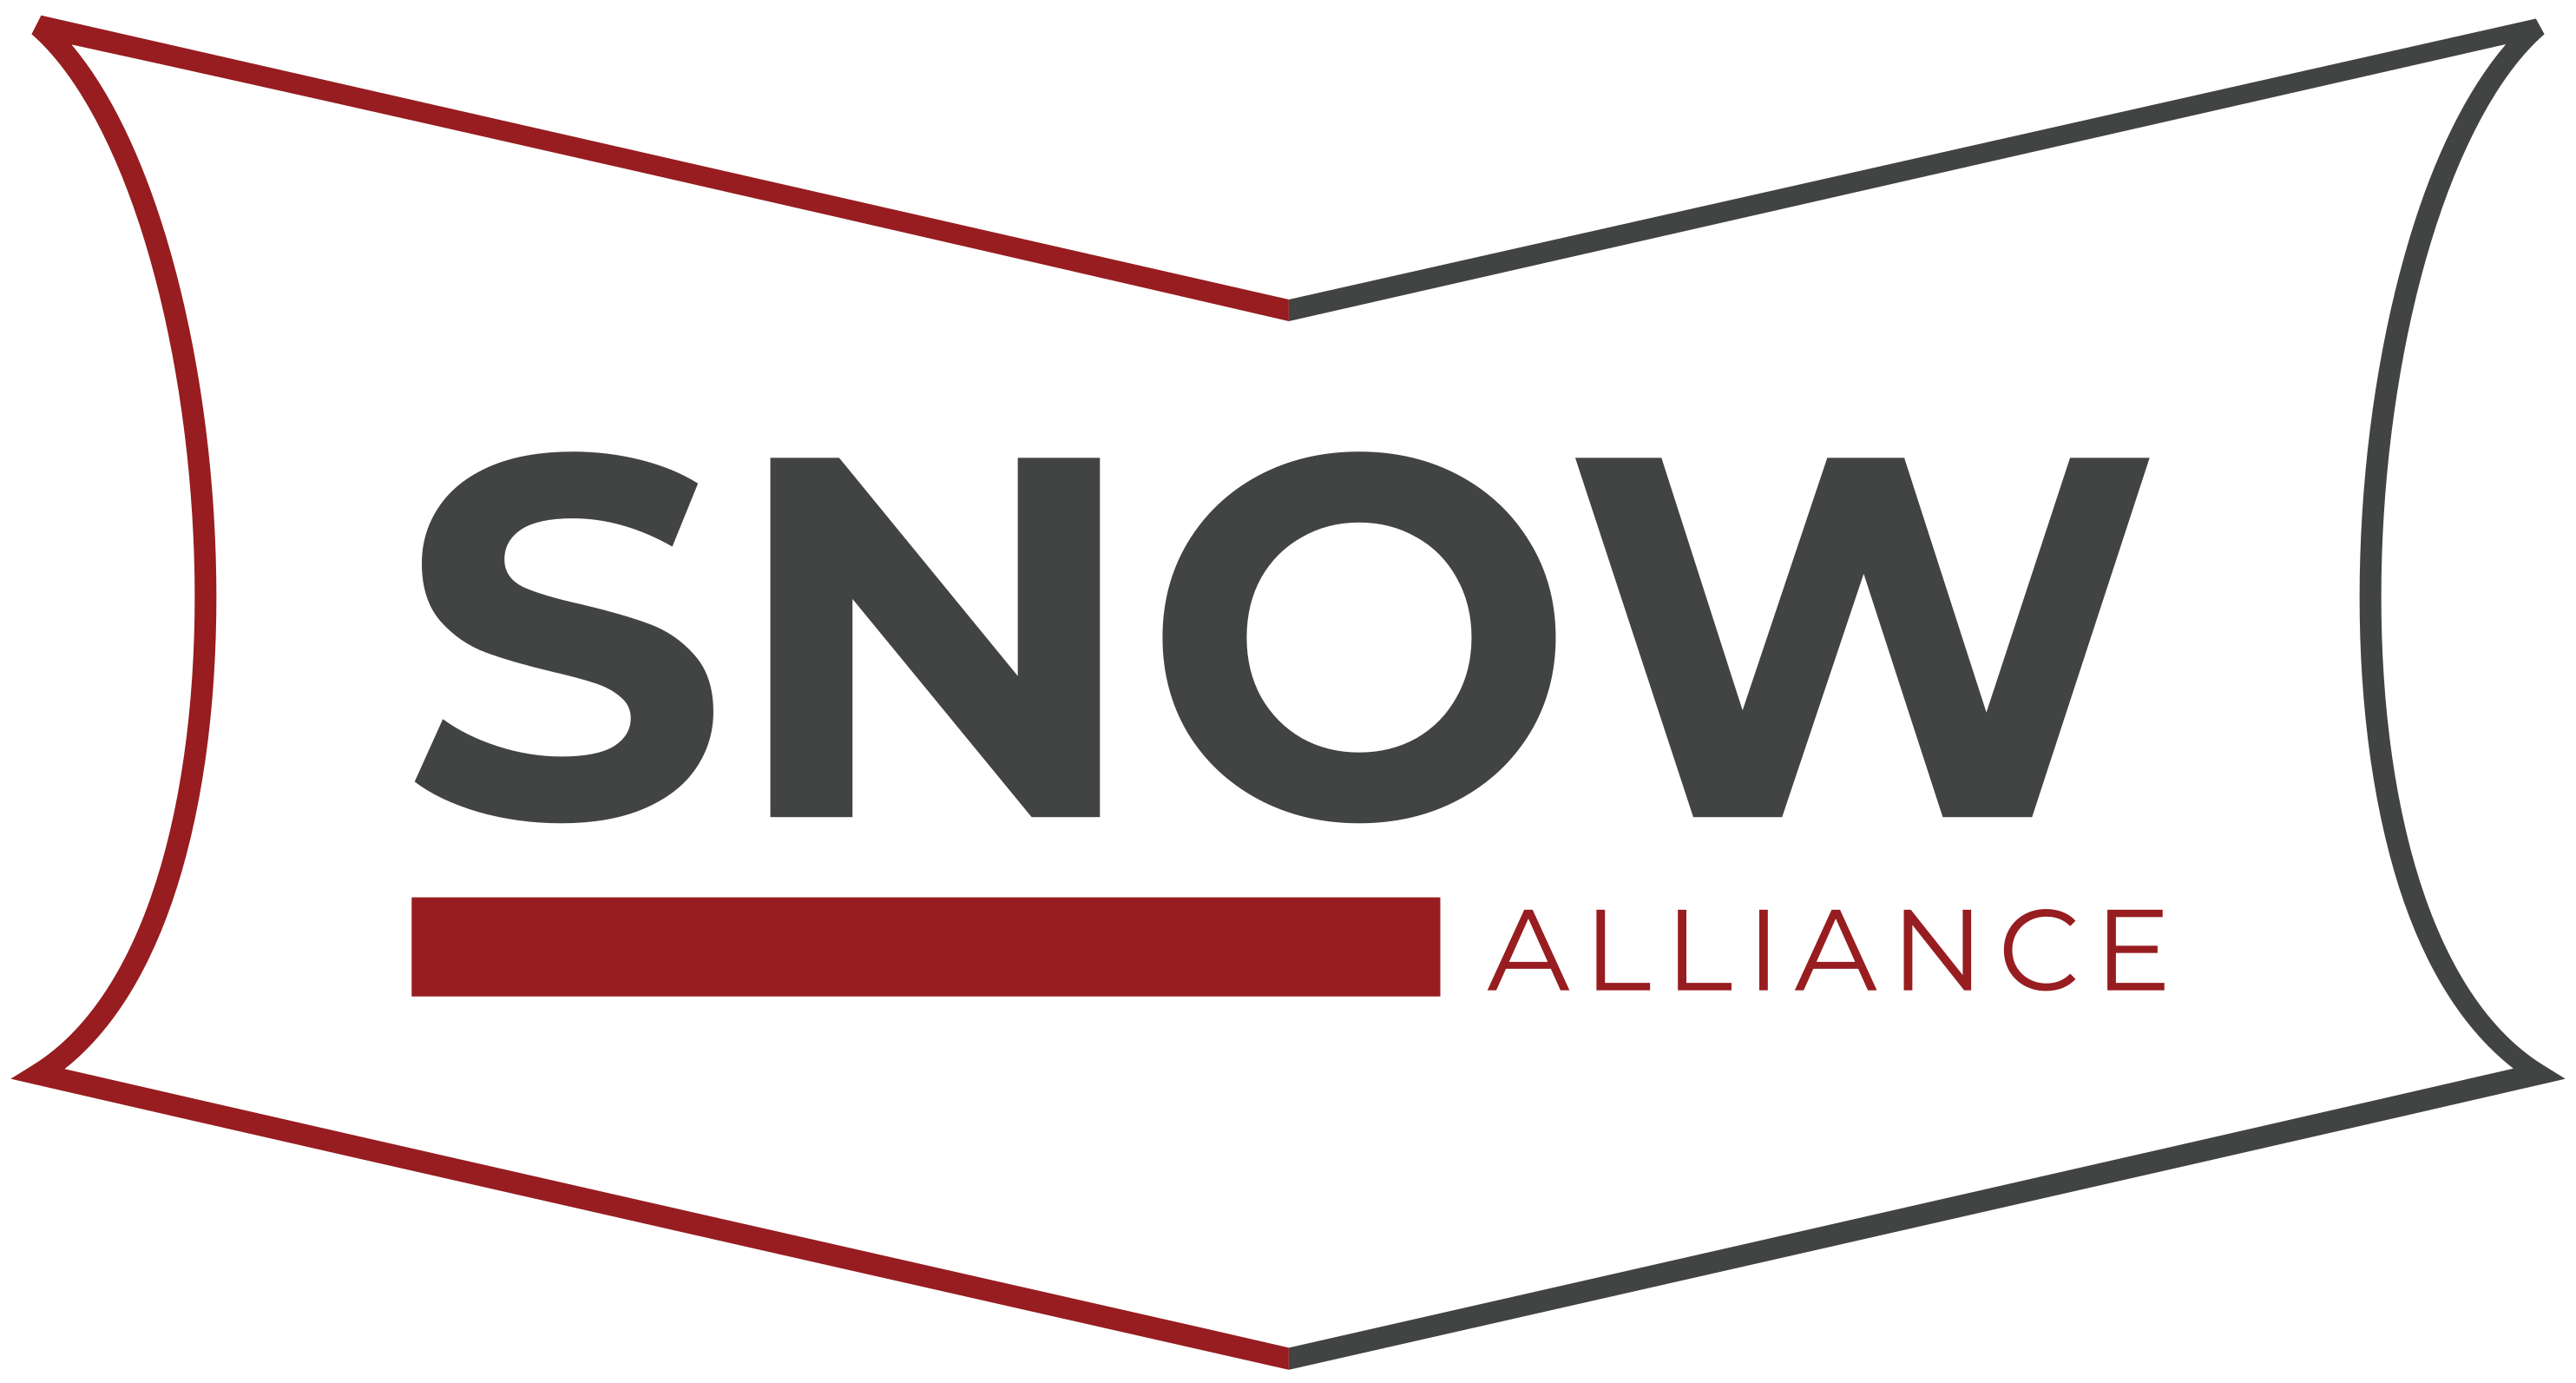 Snow Alliance